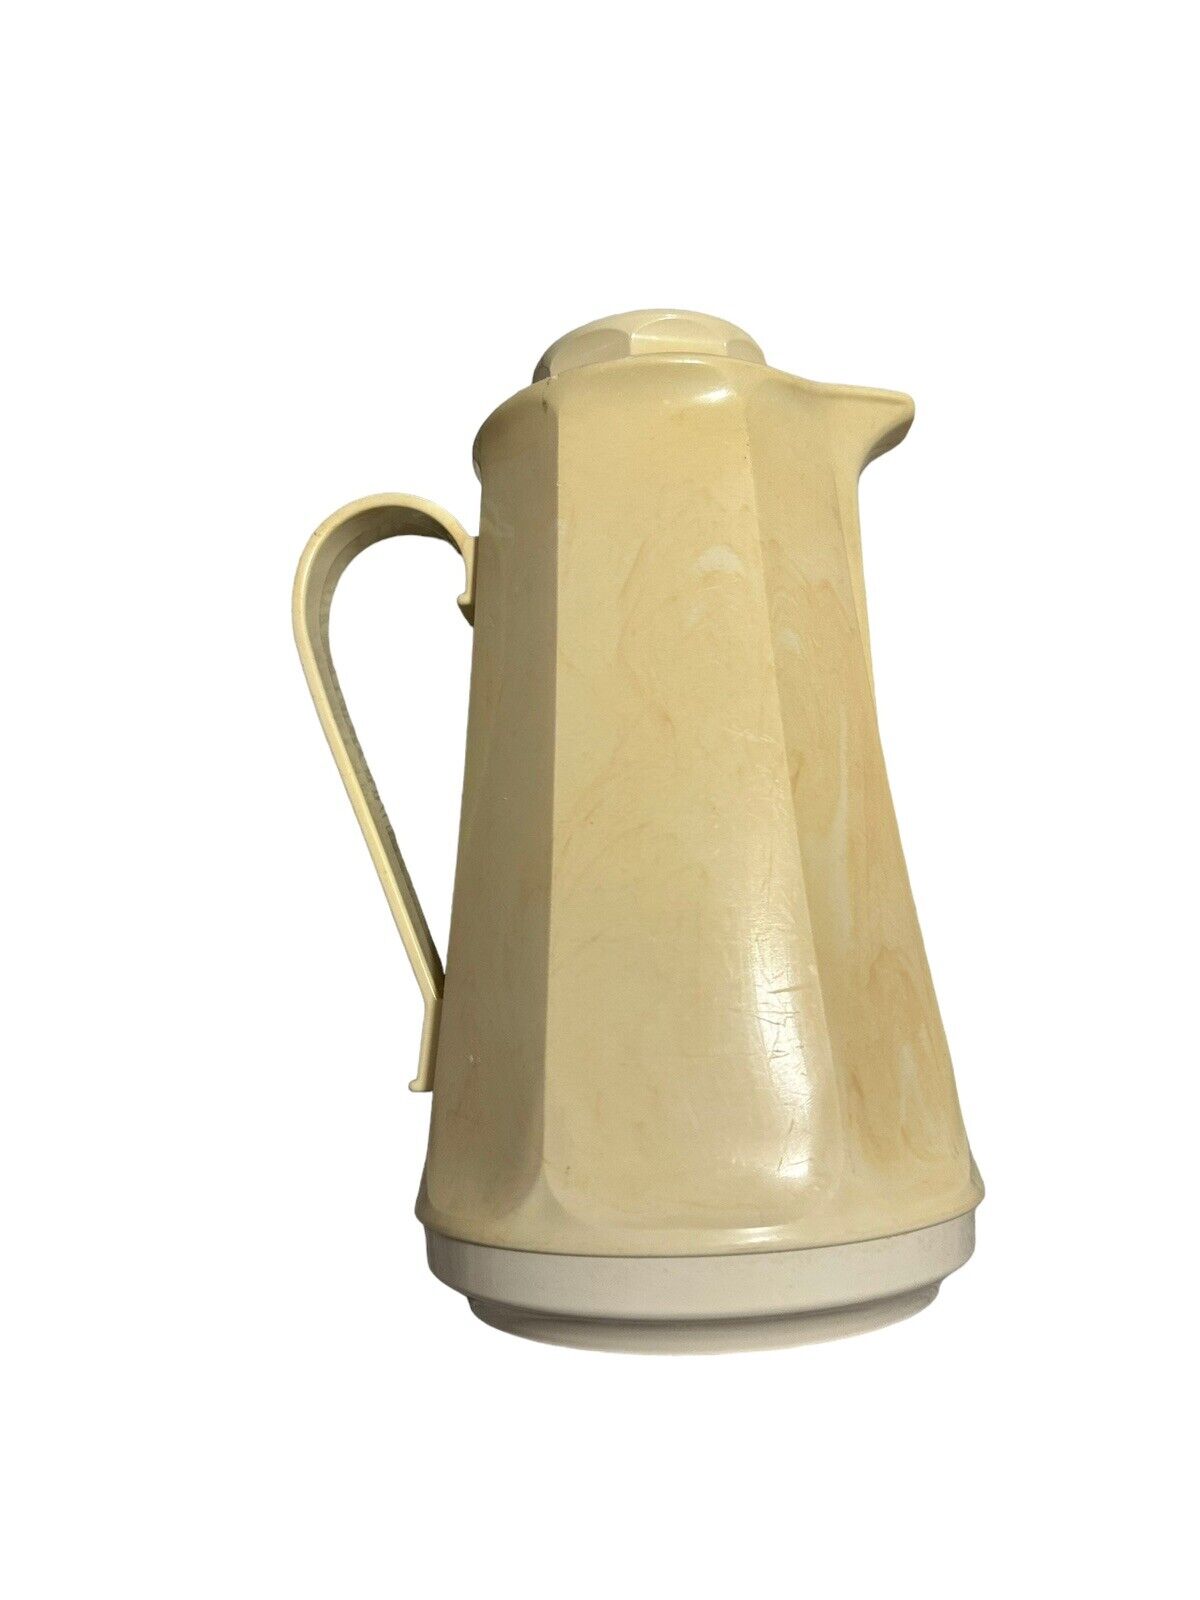 Vintage Thermos Coffee Butler Carafe Insulated Canada 5000 50 oz